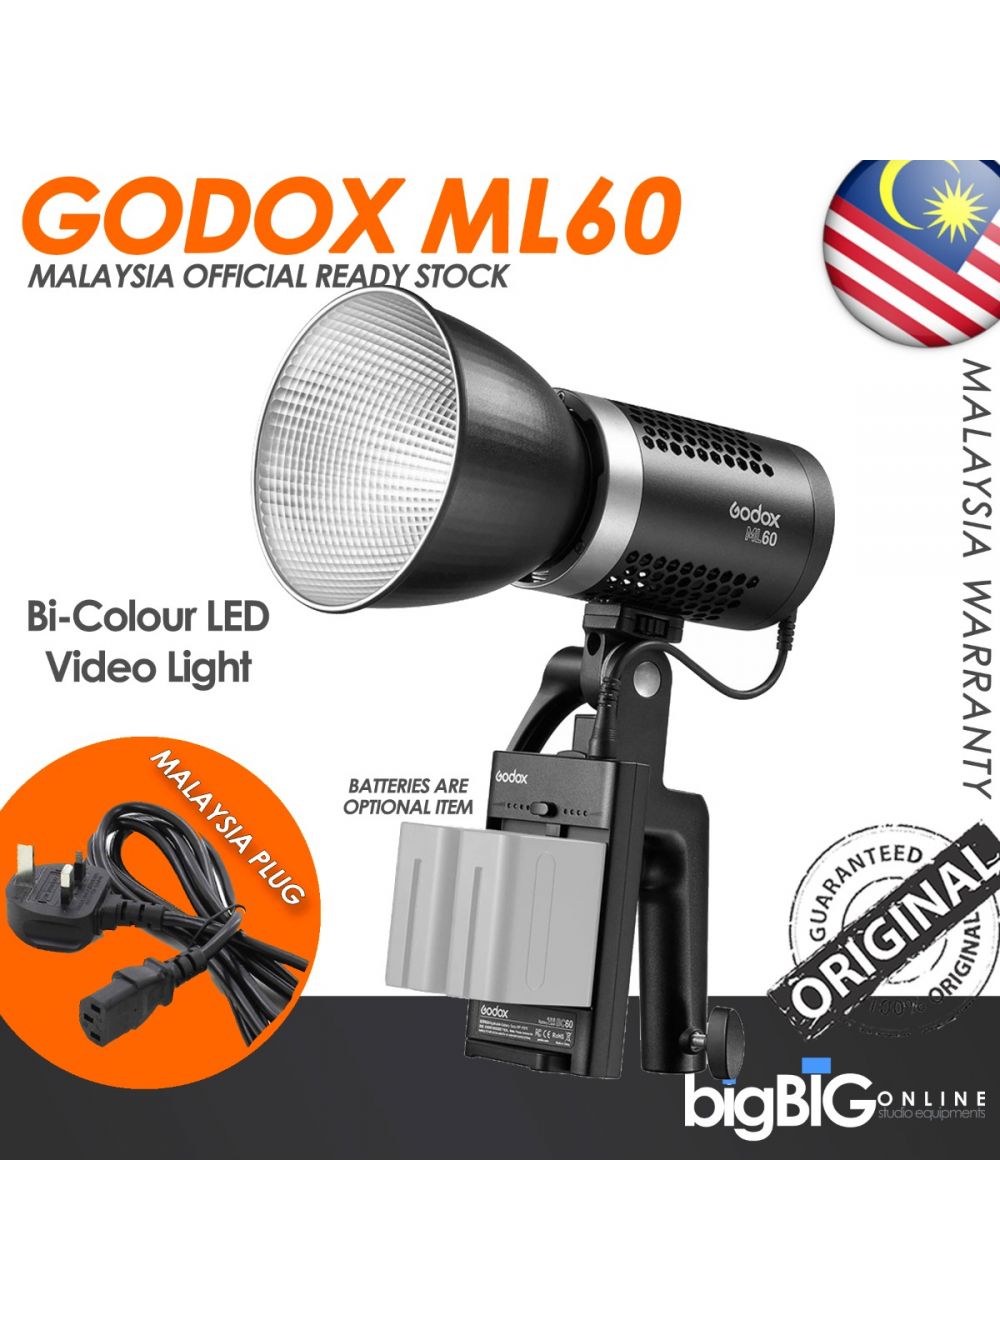 Bigbig Studio Lighting Equipment Malaysia Godox ML60 & ML60 Bi